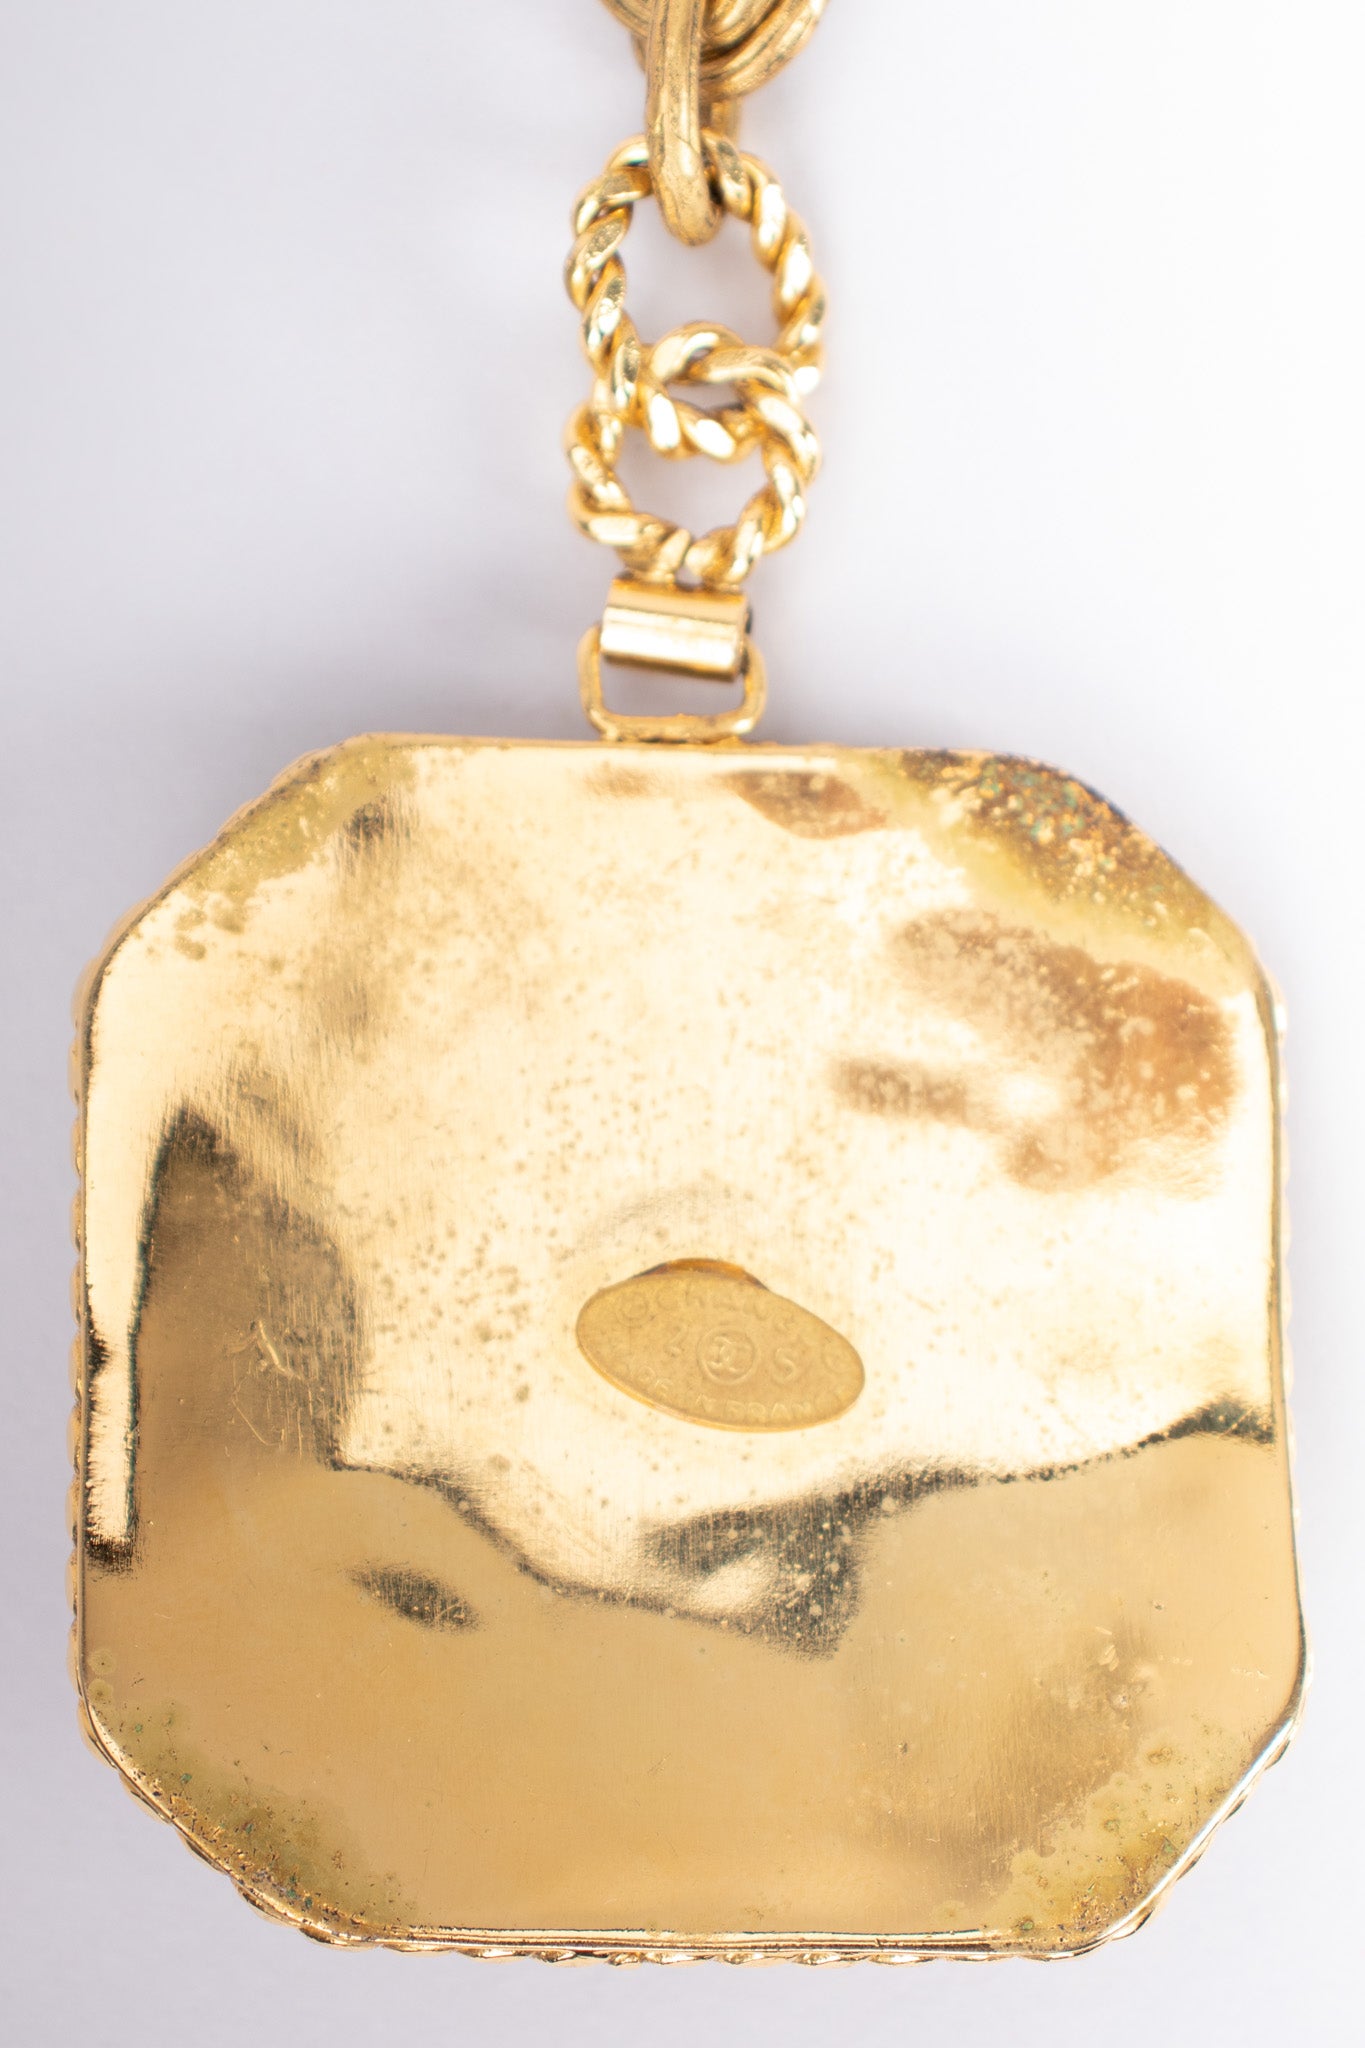 Chanel Gripoix Ruby Emerald Cabochon Medallion Pendant Necklace